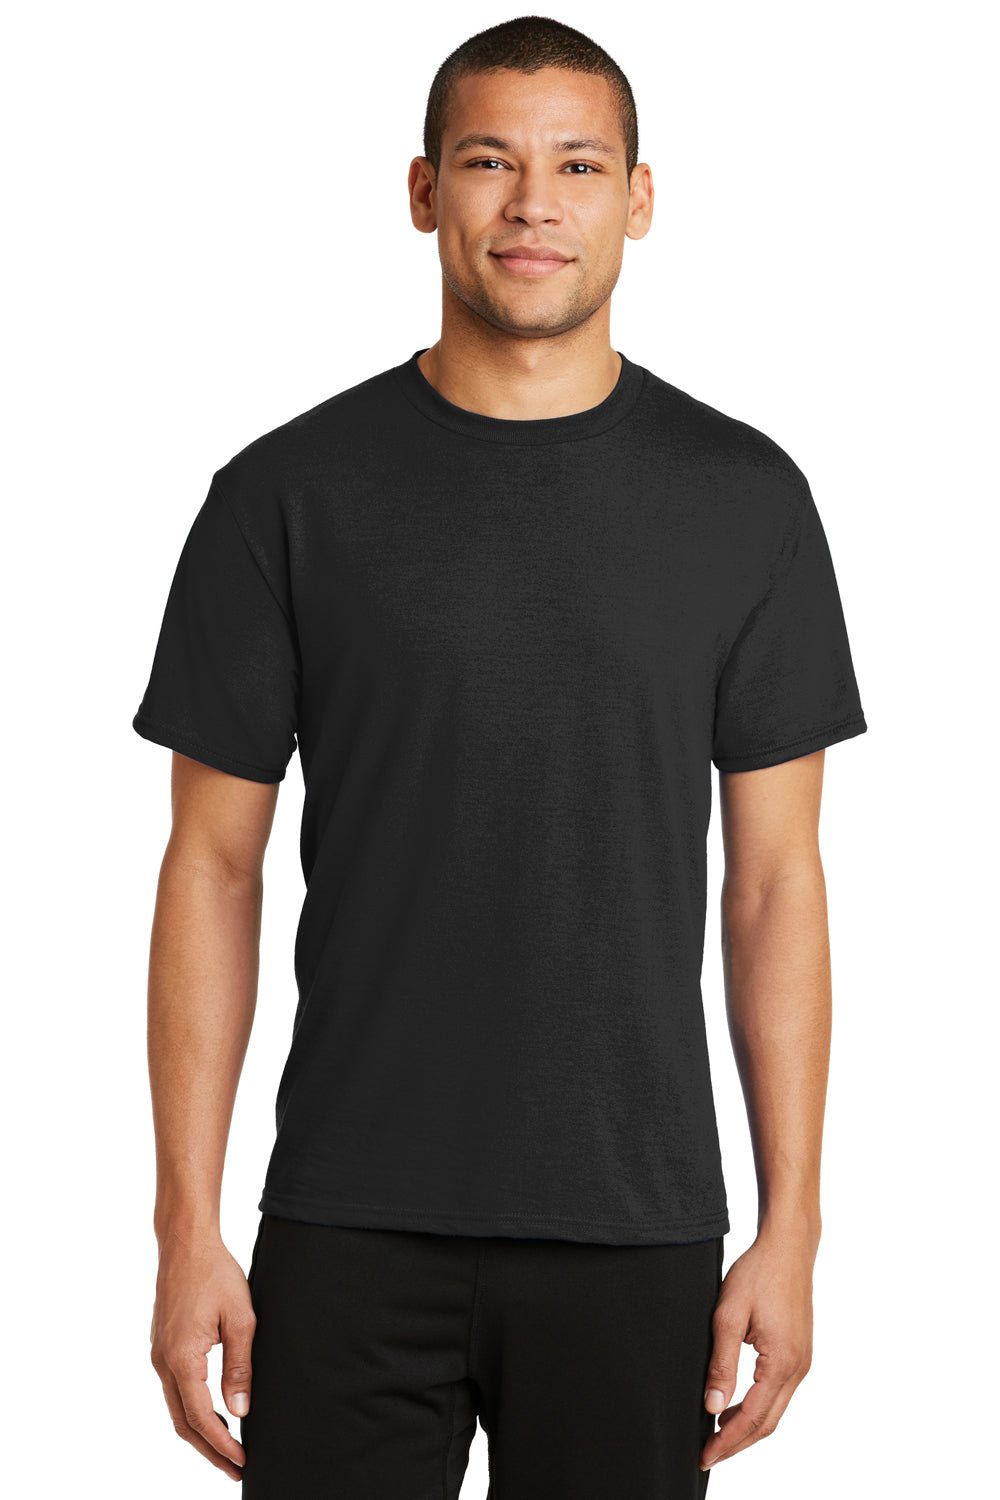 Port & Company PC381 Mens Dry Zone Performance Moisture Wicking Short Sleeve Crewneck T-Shirt Black Front